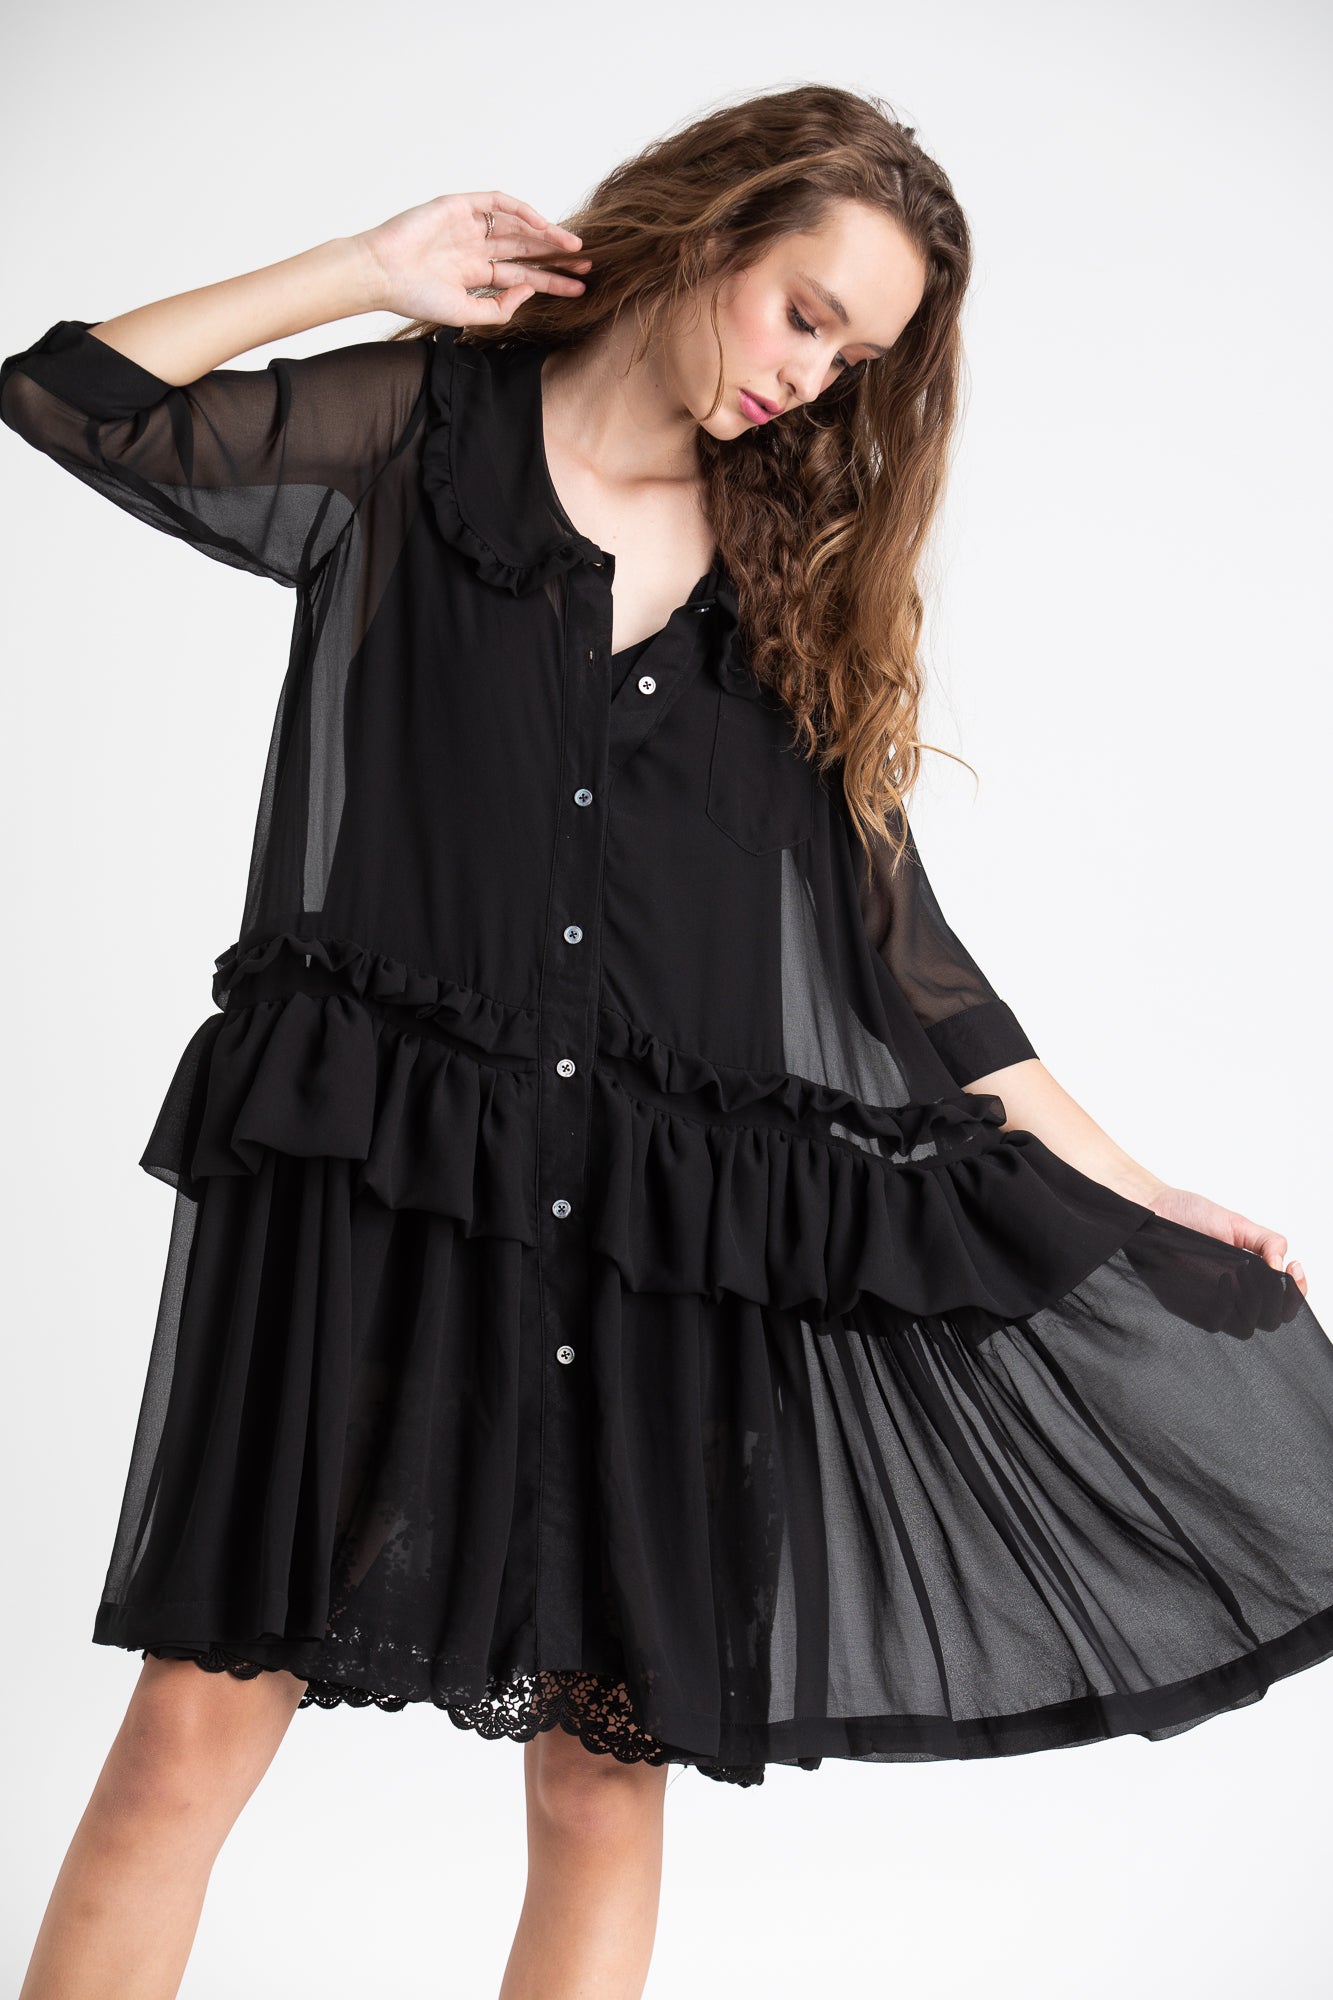 black chiffon coat dress,